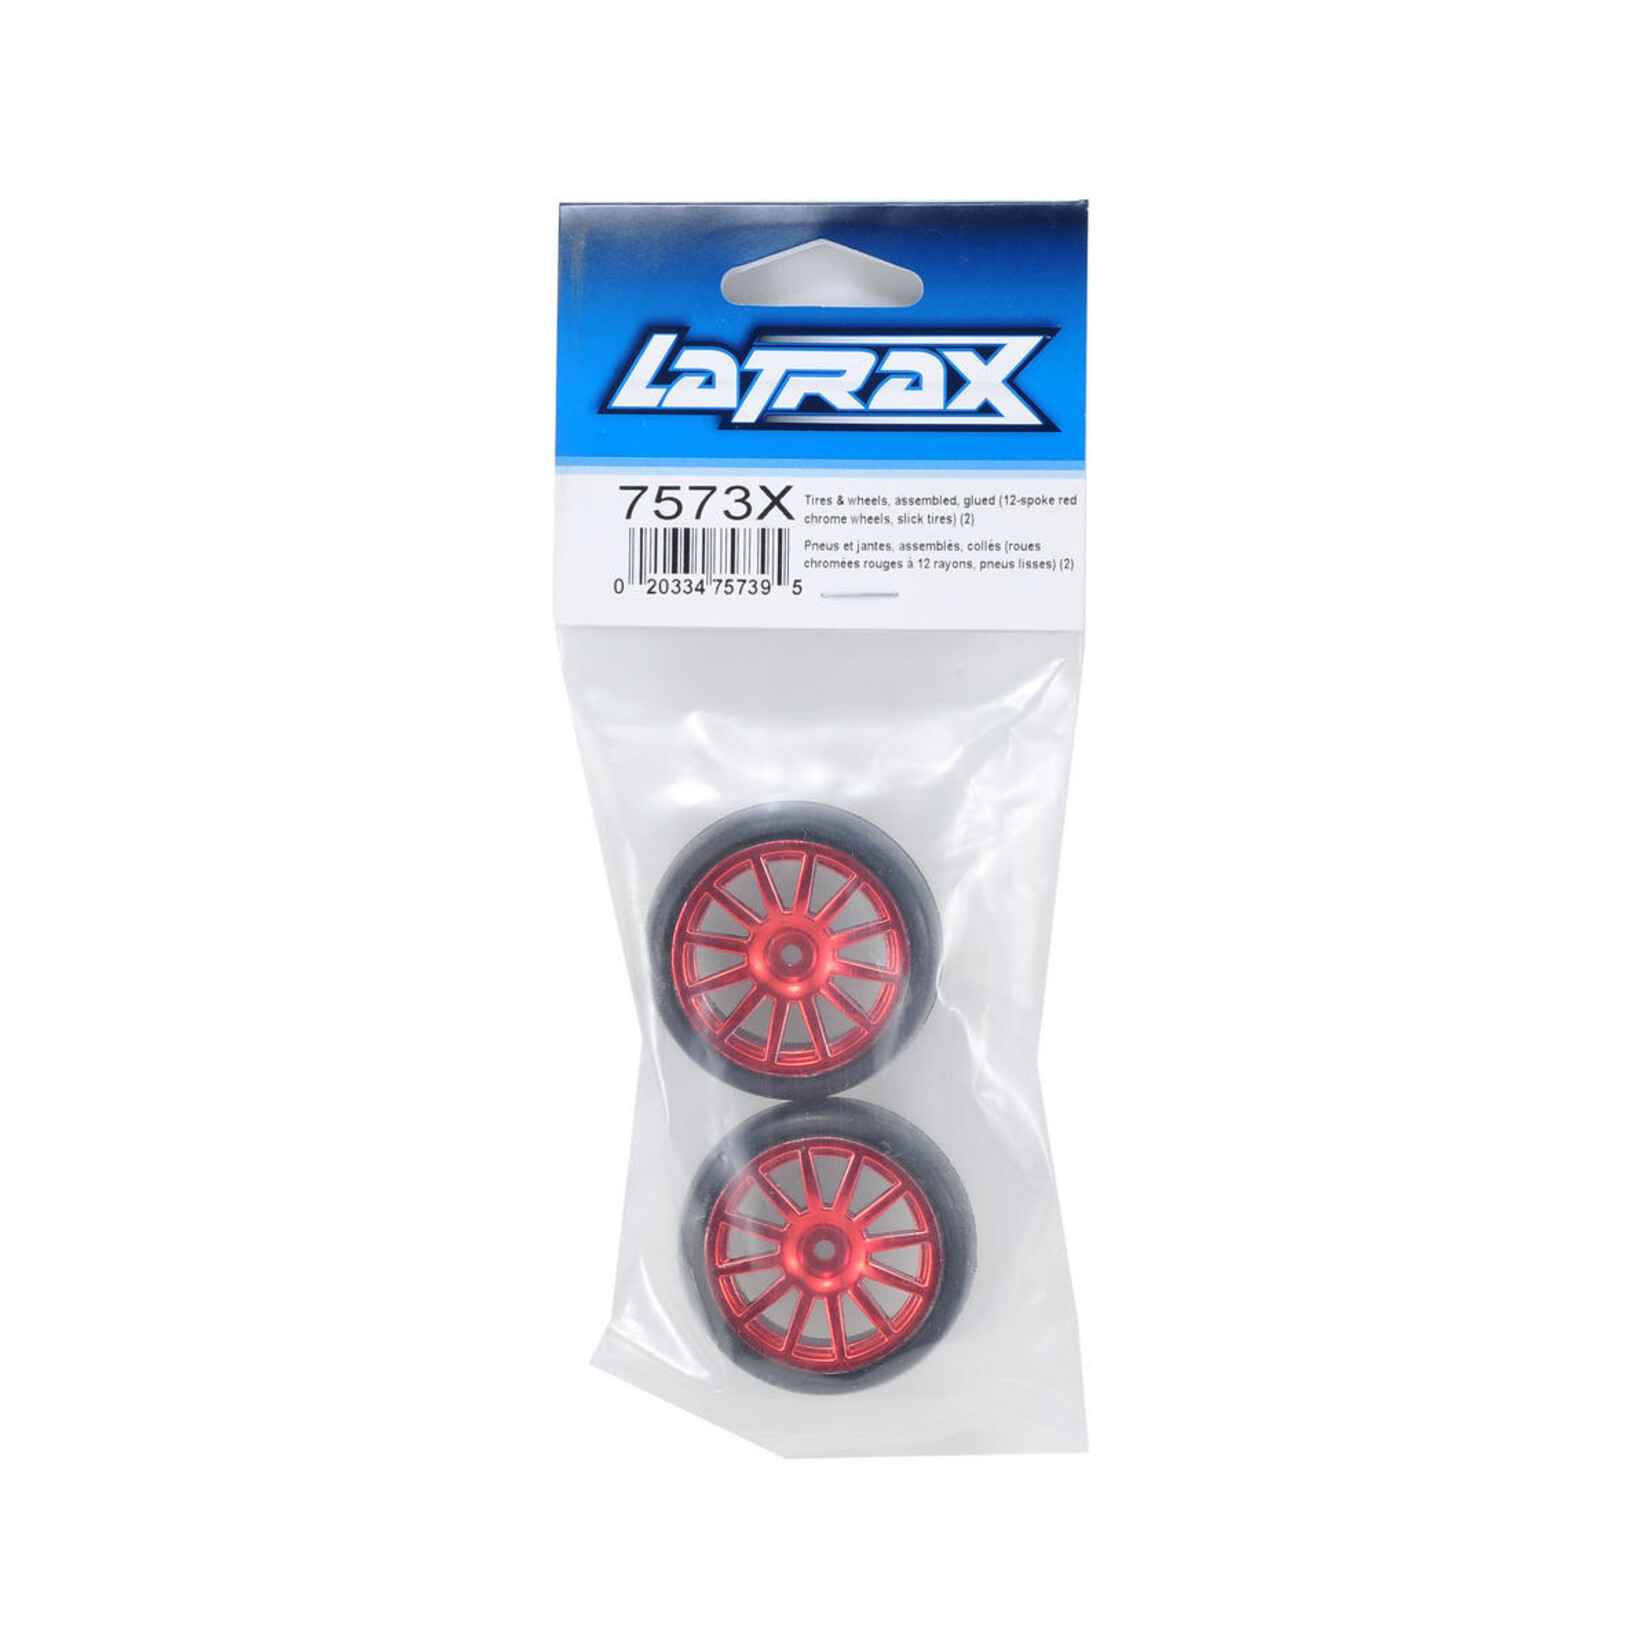 Traxxas Traxxas LaTrax Pre-Mounted Slick Tires & 12-Spoke Wheels (Red Chrome) (2) #7573X